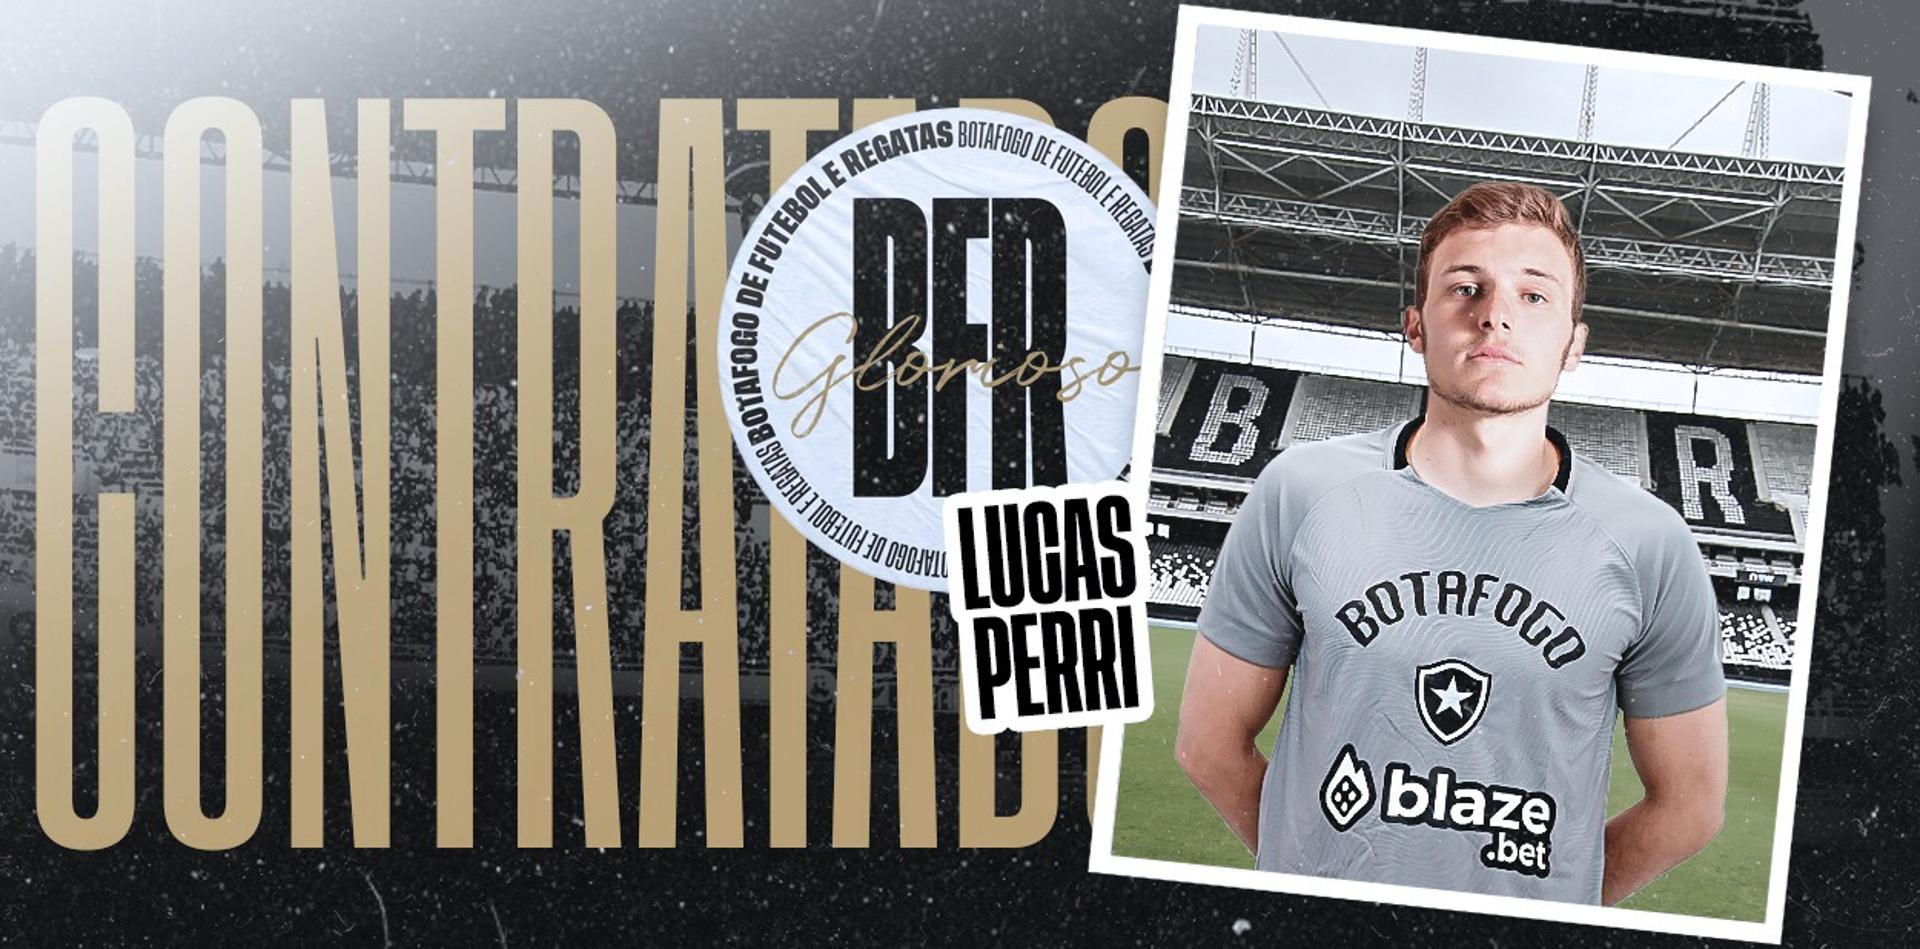 Lucas Perri - Botafogo